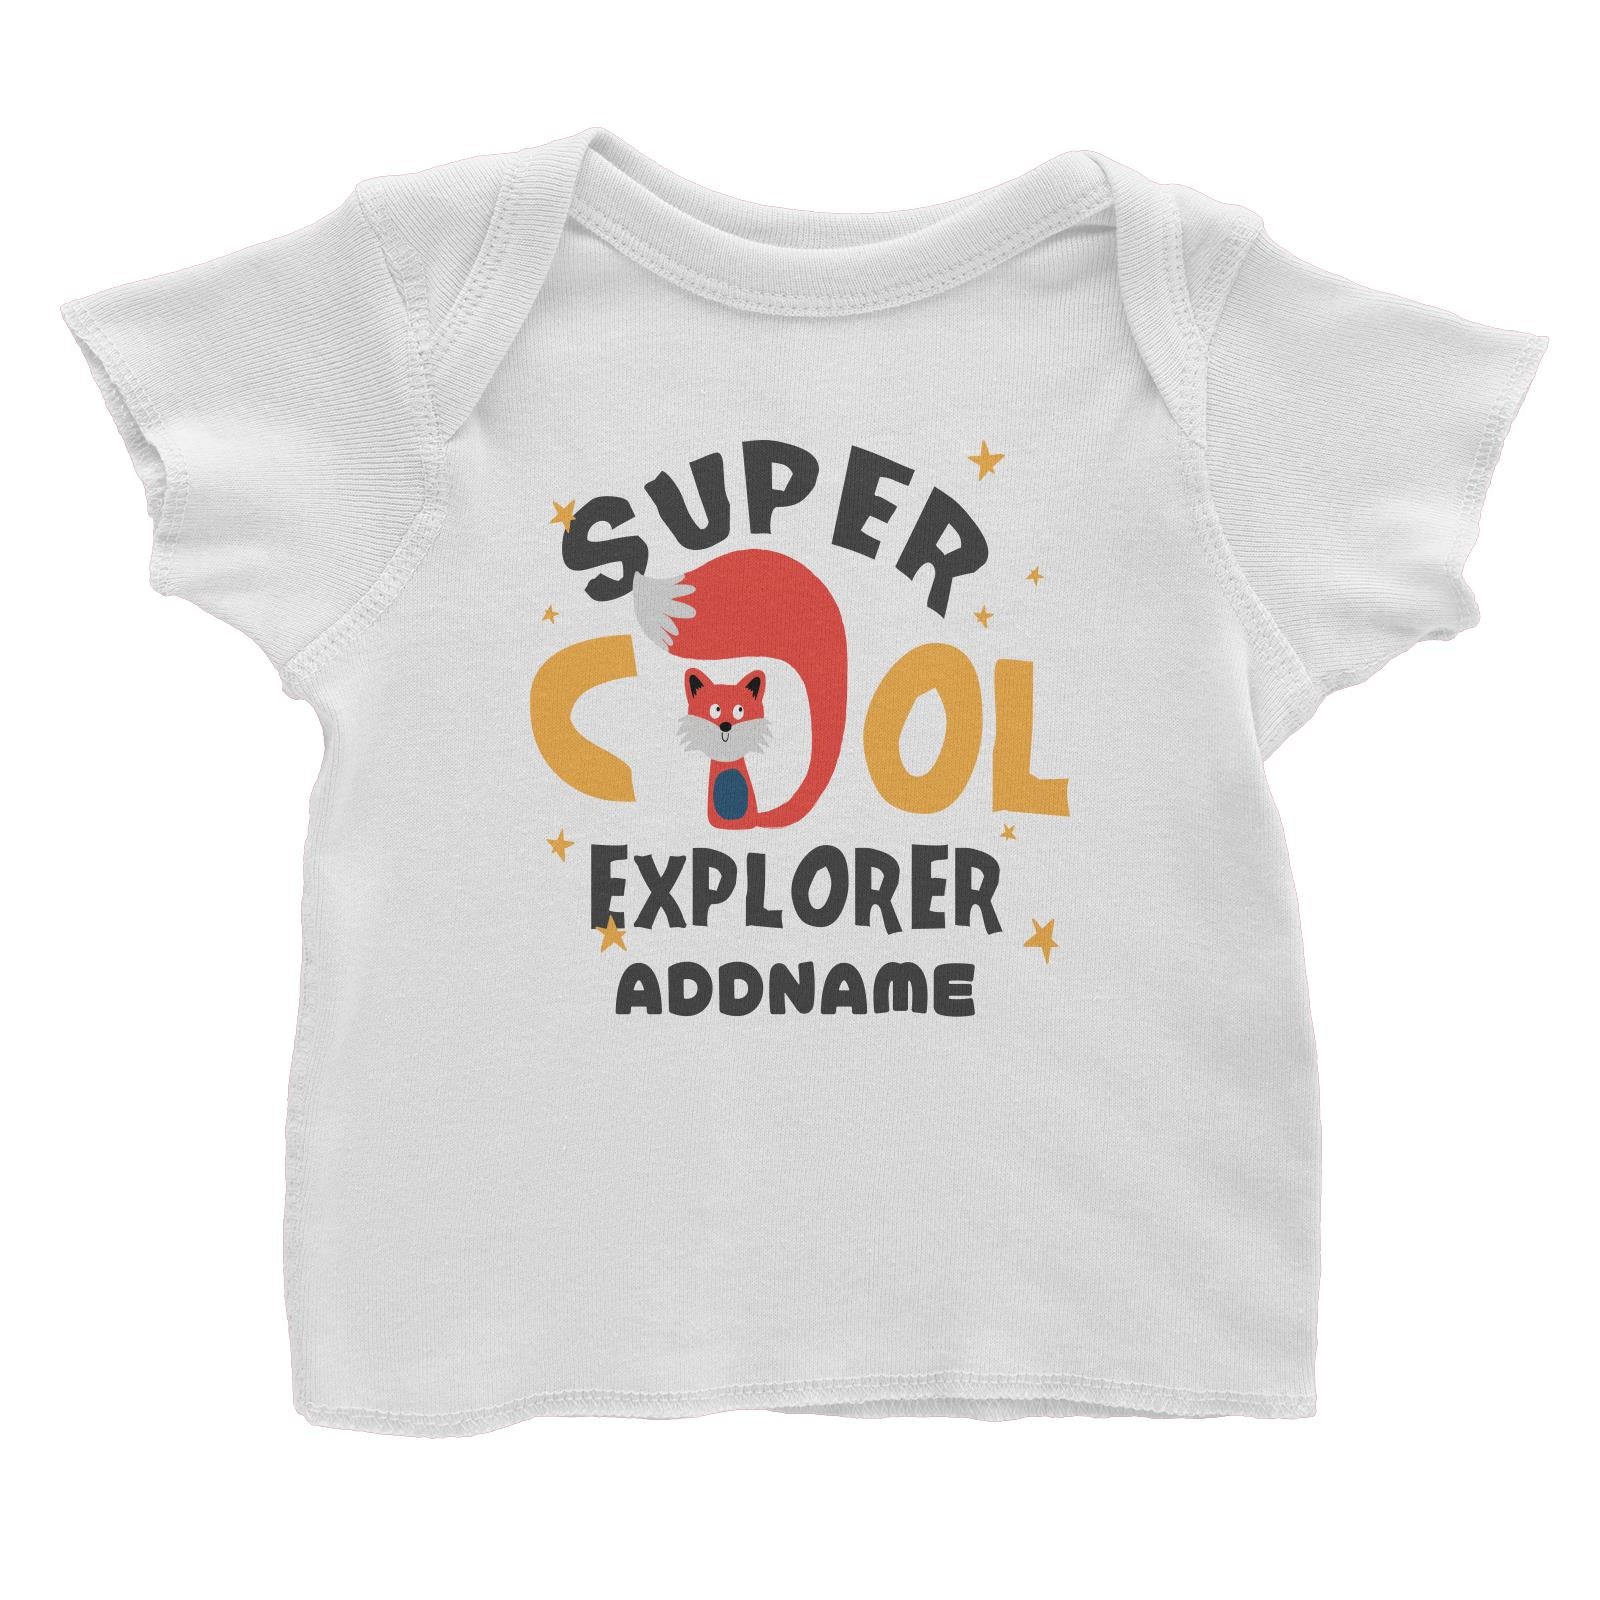 Super Cool Explorer Fox Addname White Baby T-Shirt